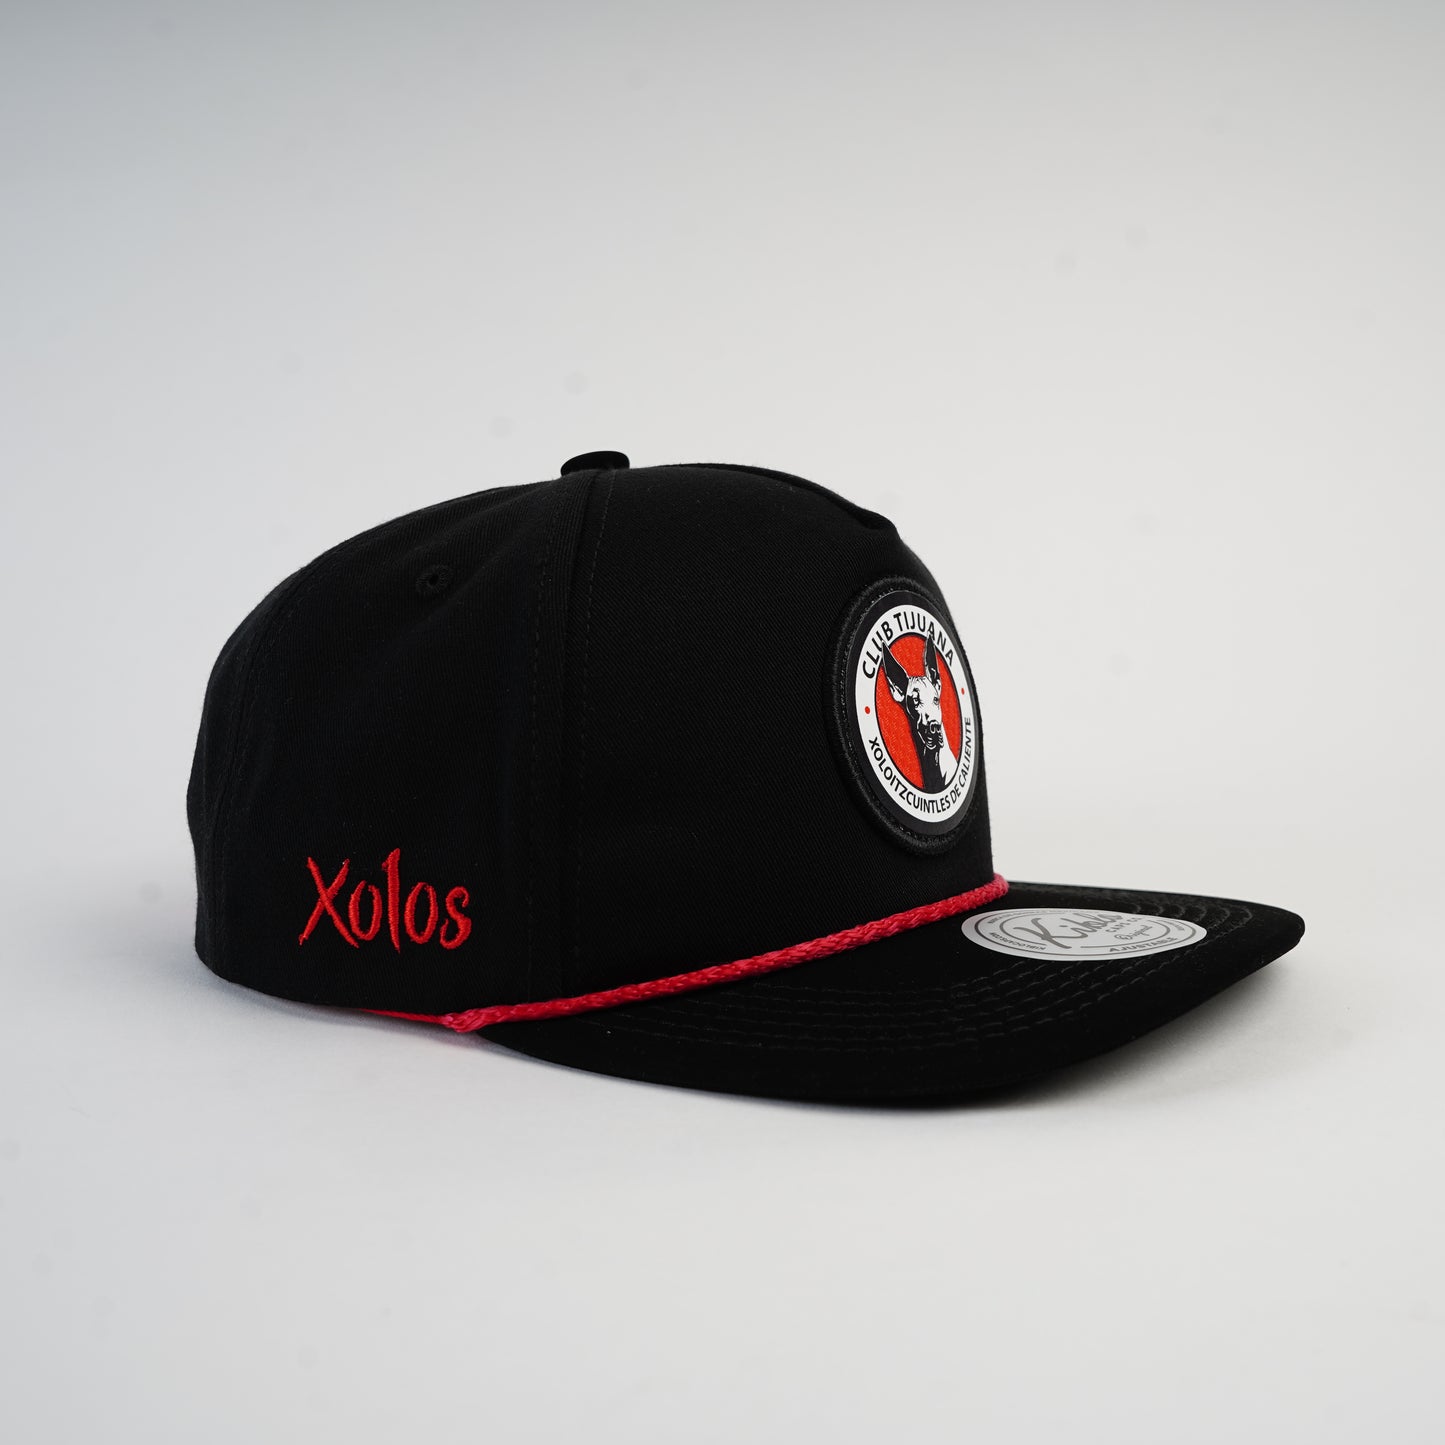 Xolos - Black Cap